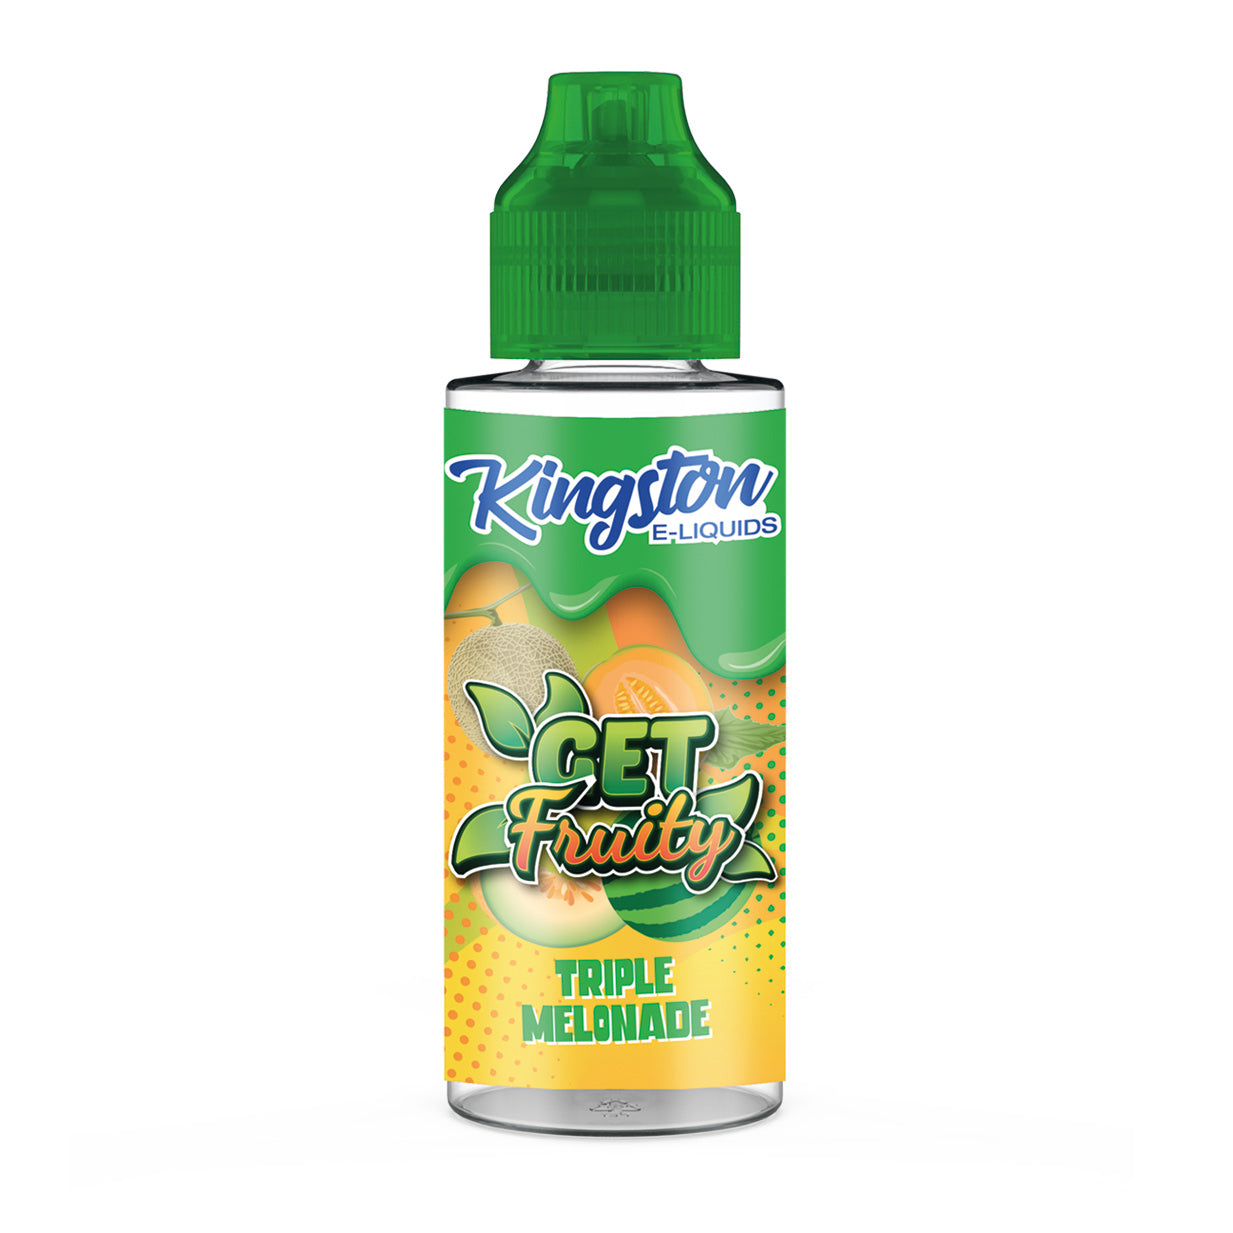 Kingston-Get-Fruity-Triple-Melonade-kingston-e-liquids-100ml-vape-juice-eliquidsoutlet-e-juice-shortfill